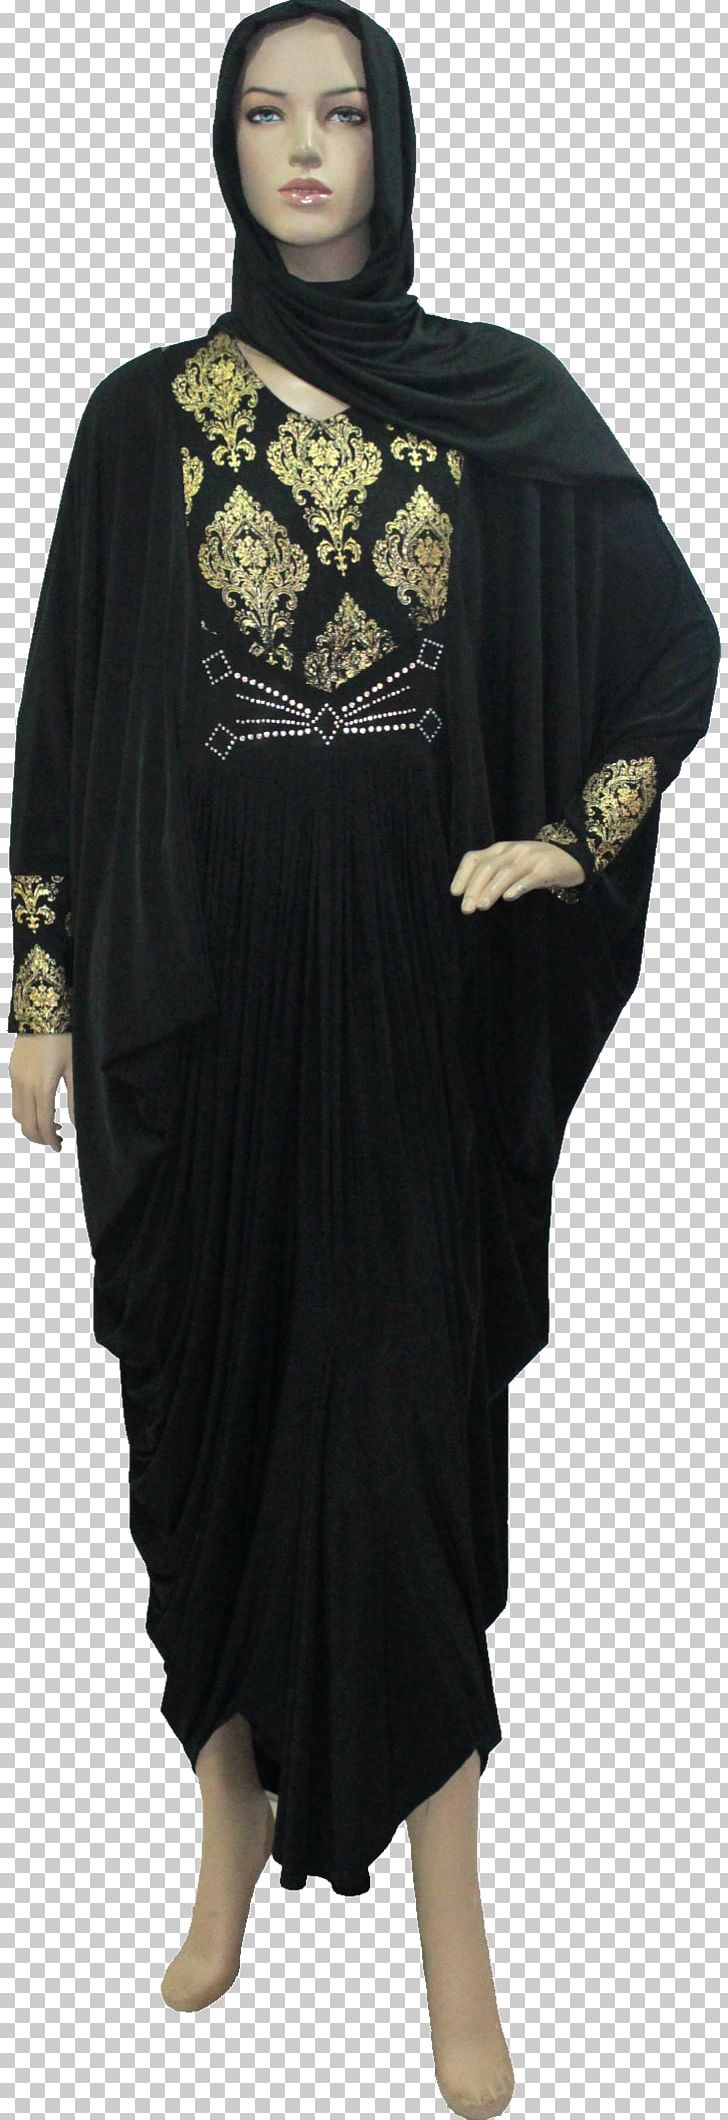 Robe Abaya Clothing Muslim Islamic Fashion PNG, Clipart, Abaya, Academic Dress, Clothing, Costume, Djellaba Free PNG Download